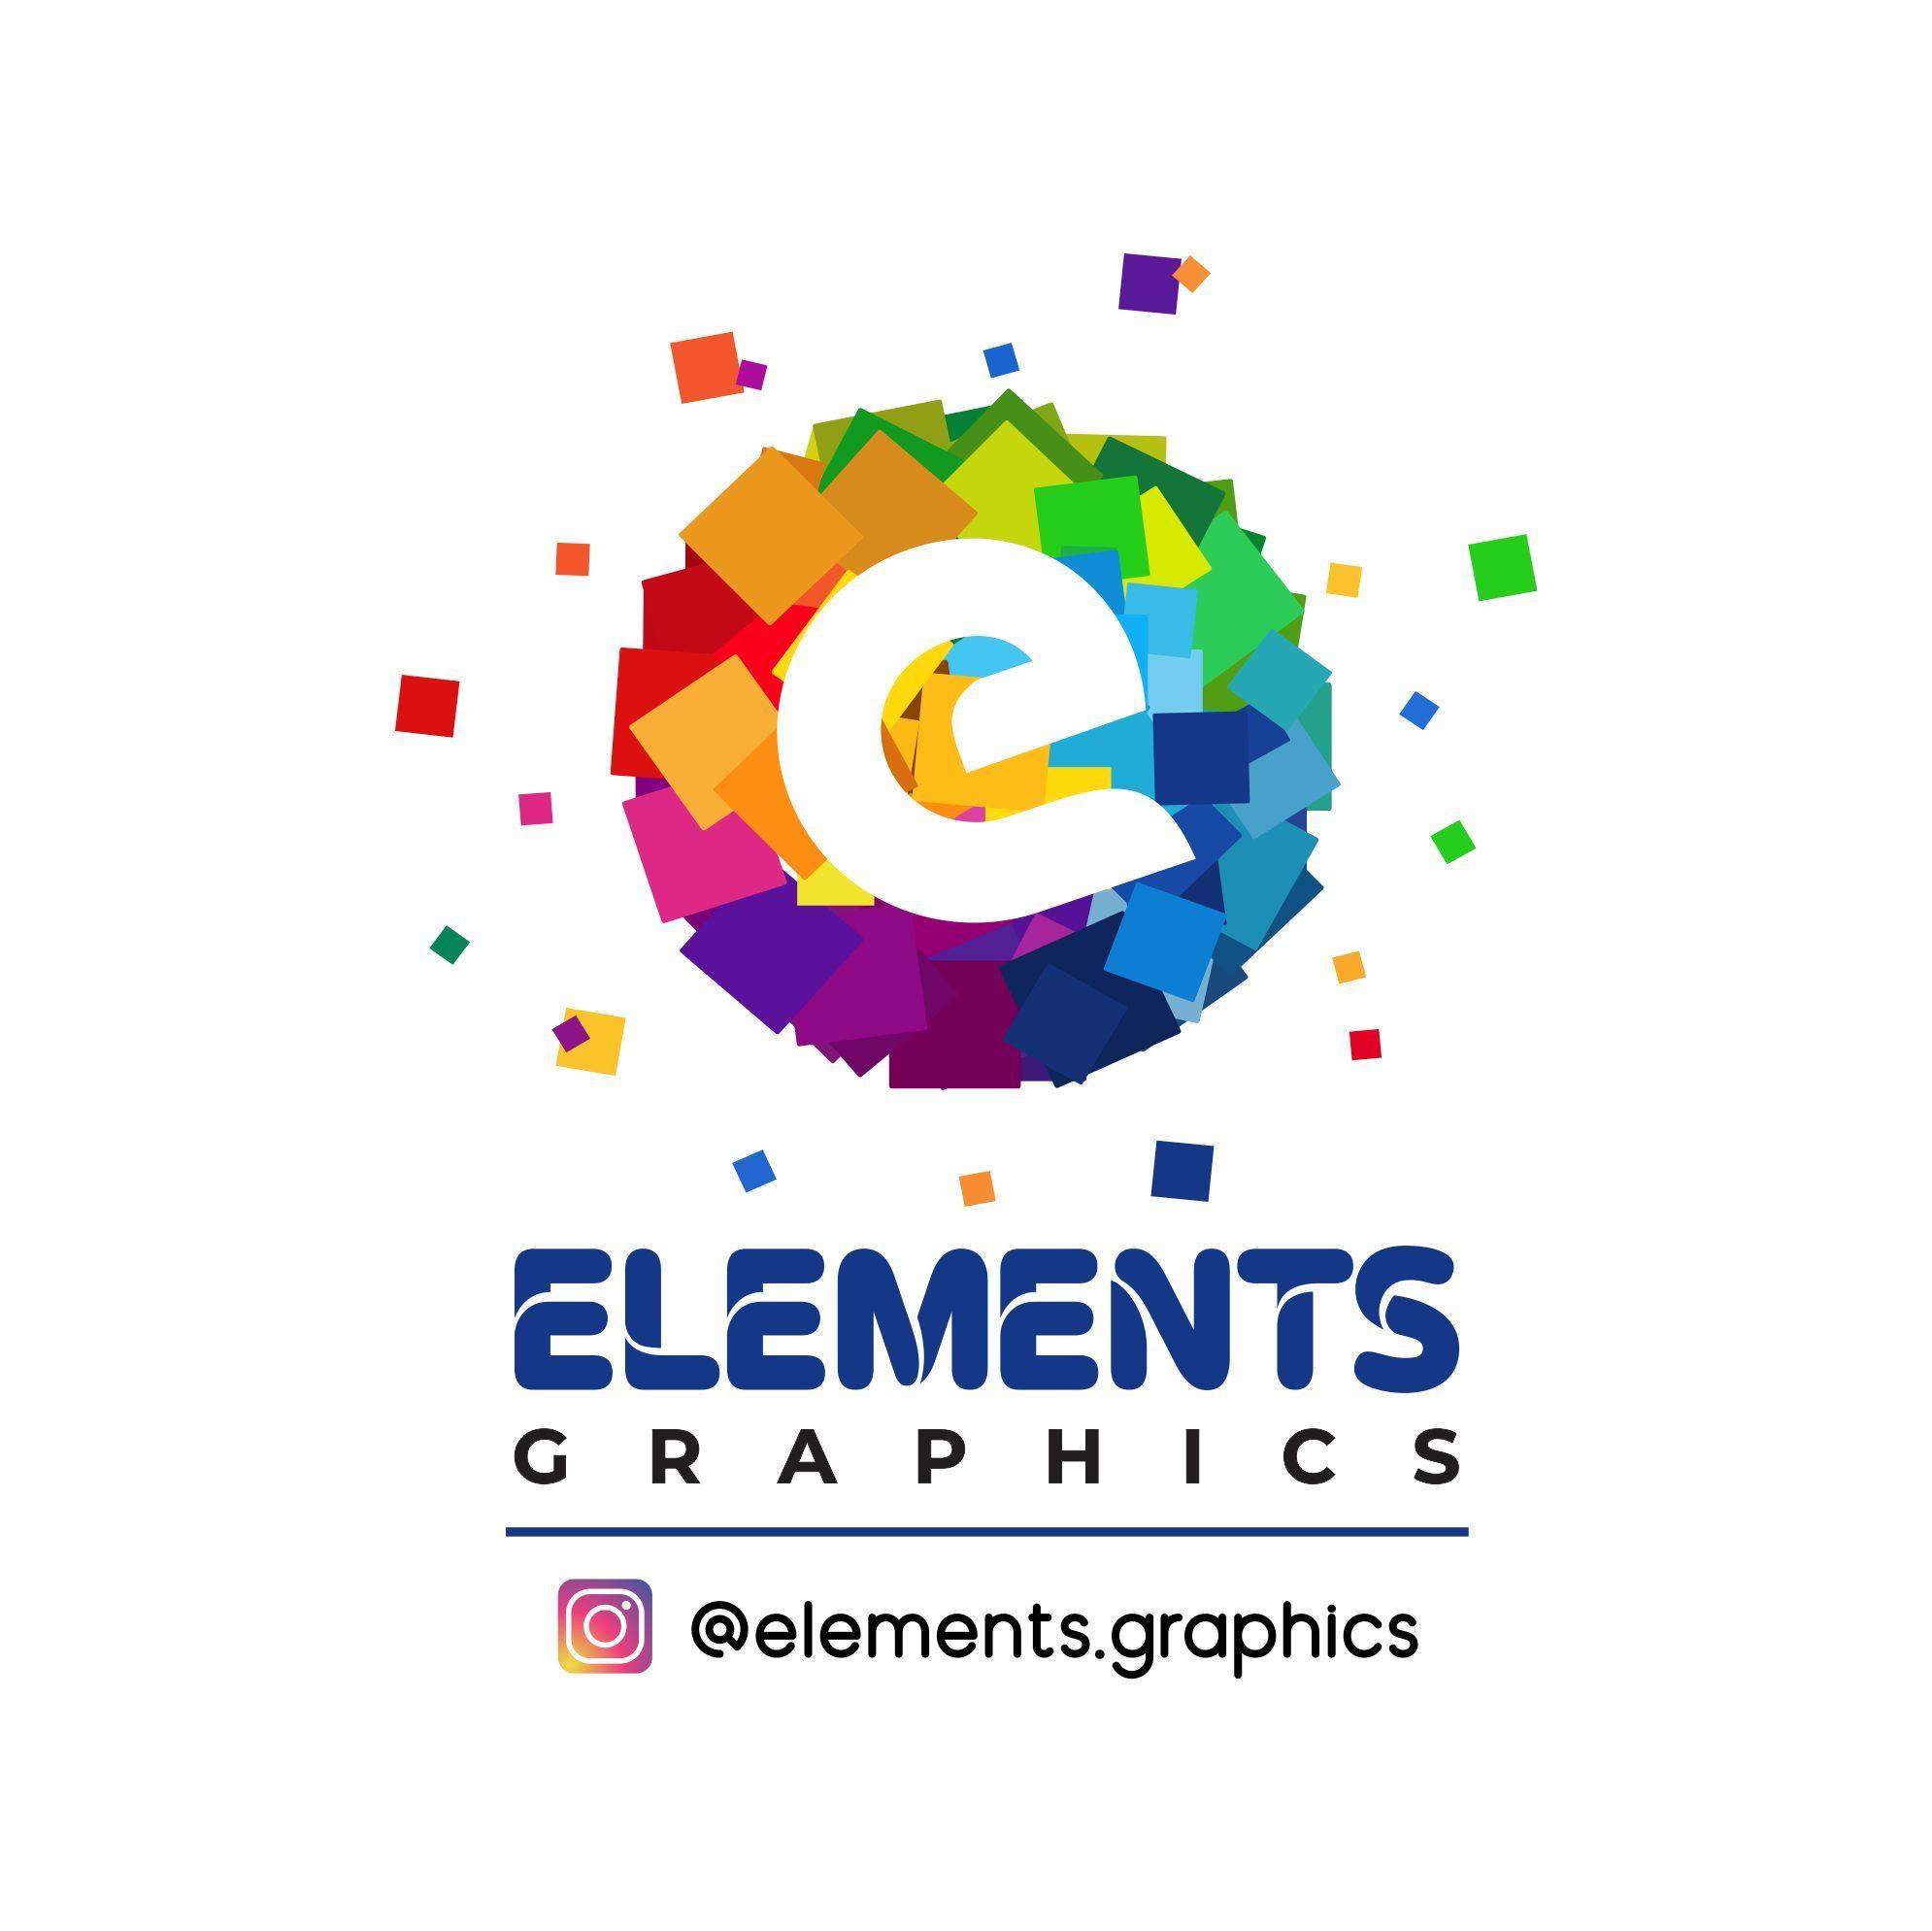 Elements Graphics